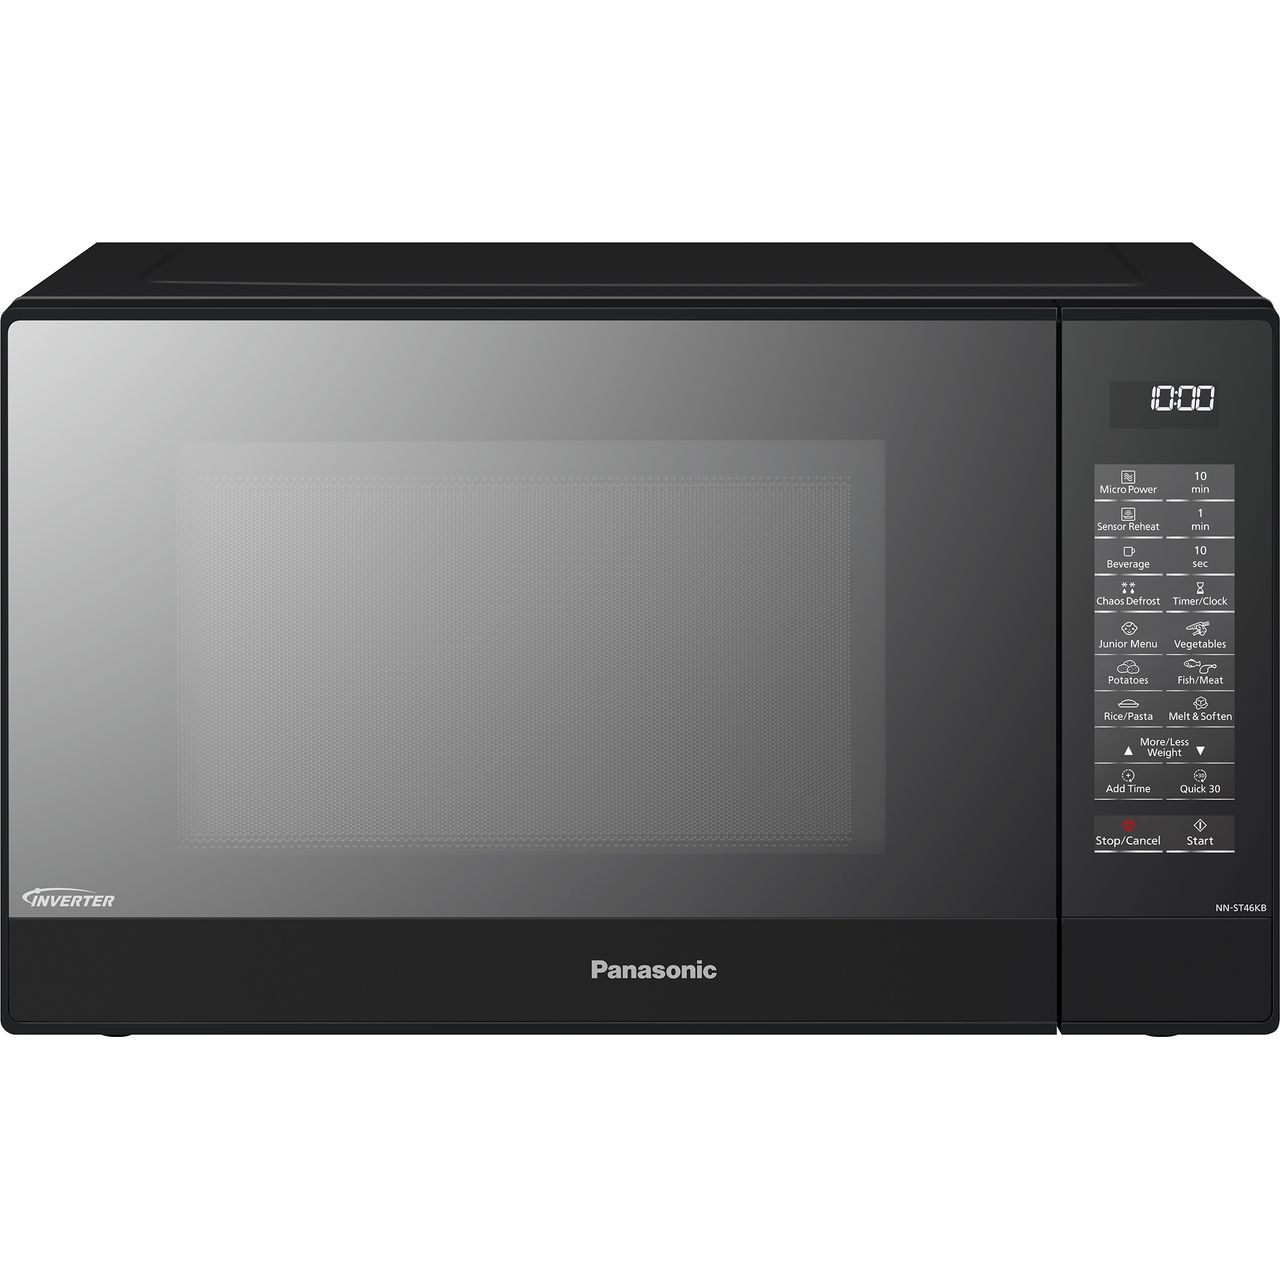 Panasonic NN-ST46KBBPQ 32 Litre Microwave Review